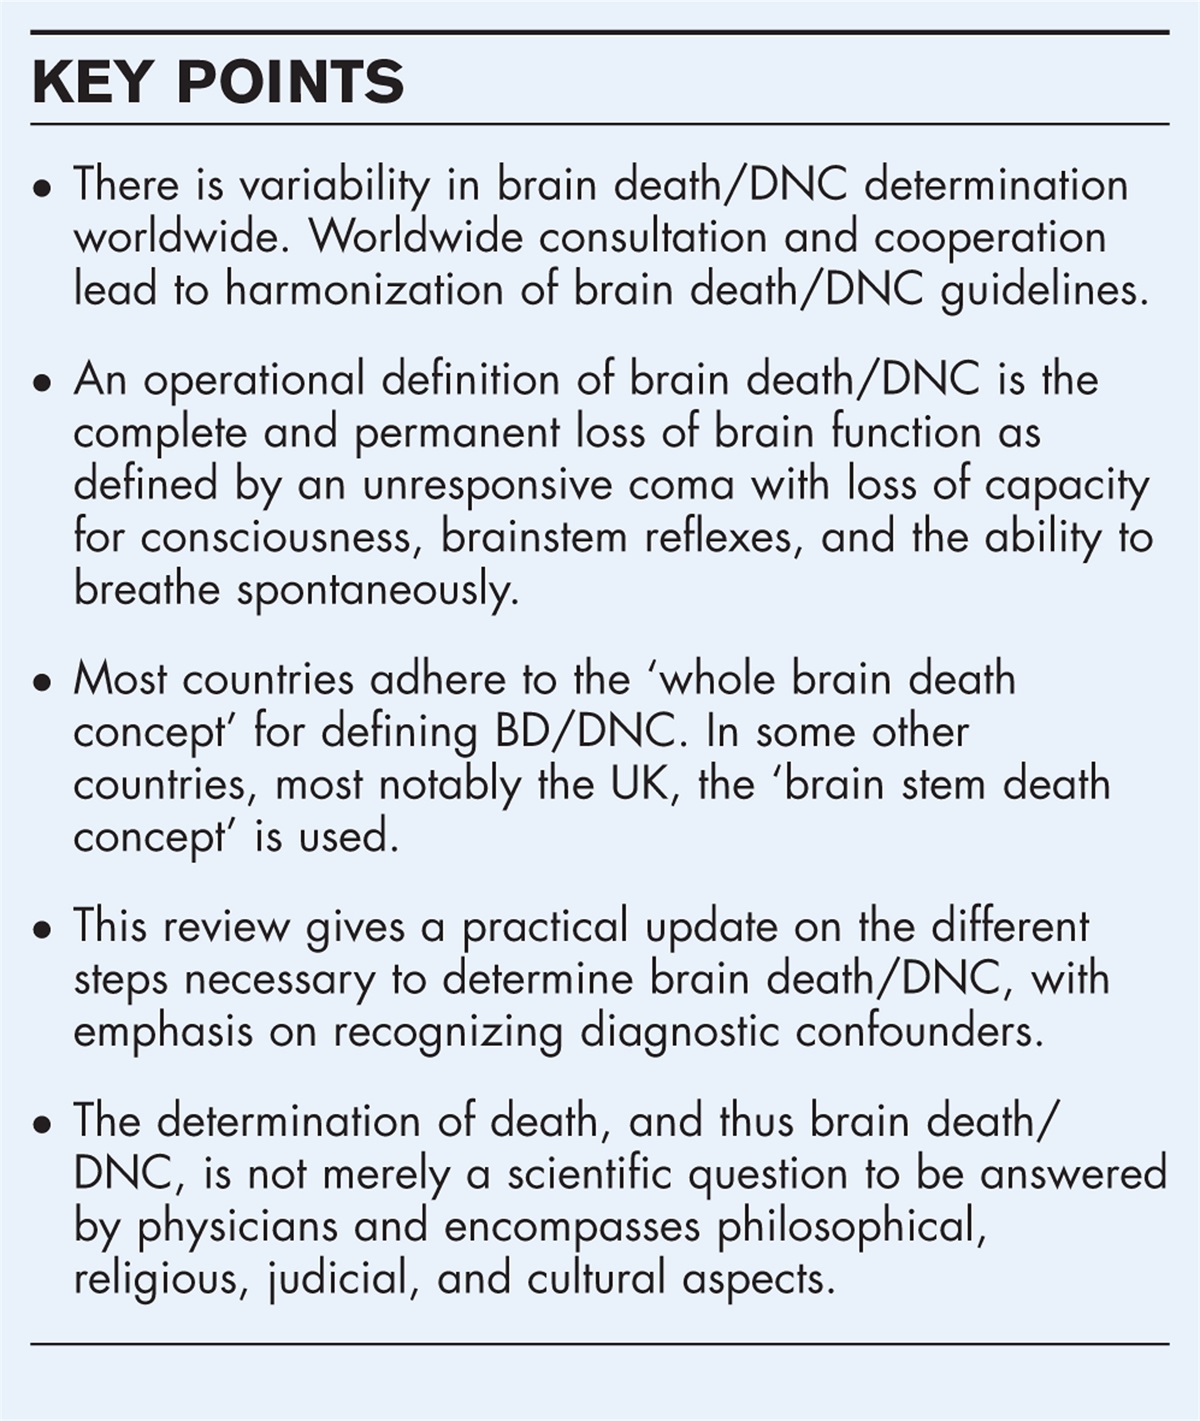 Brain death/death by neurologic criteria determination: an update